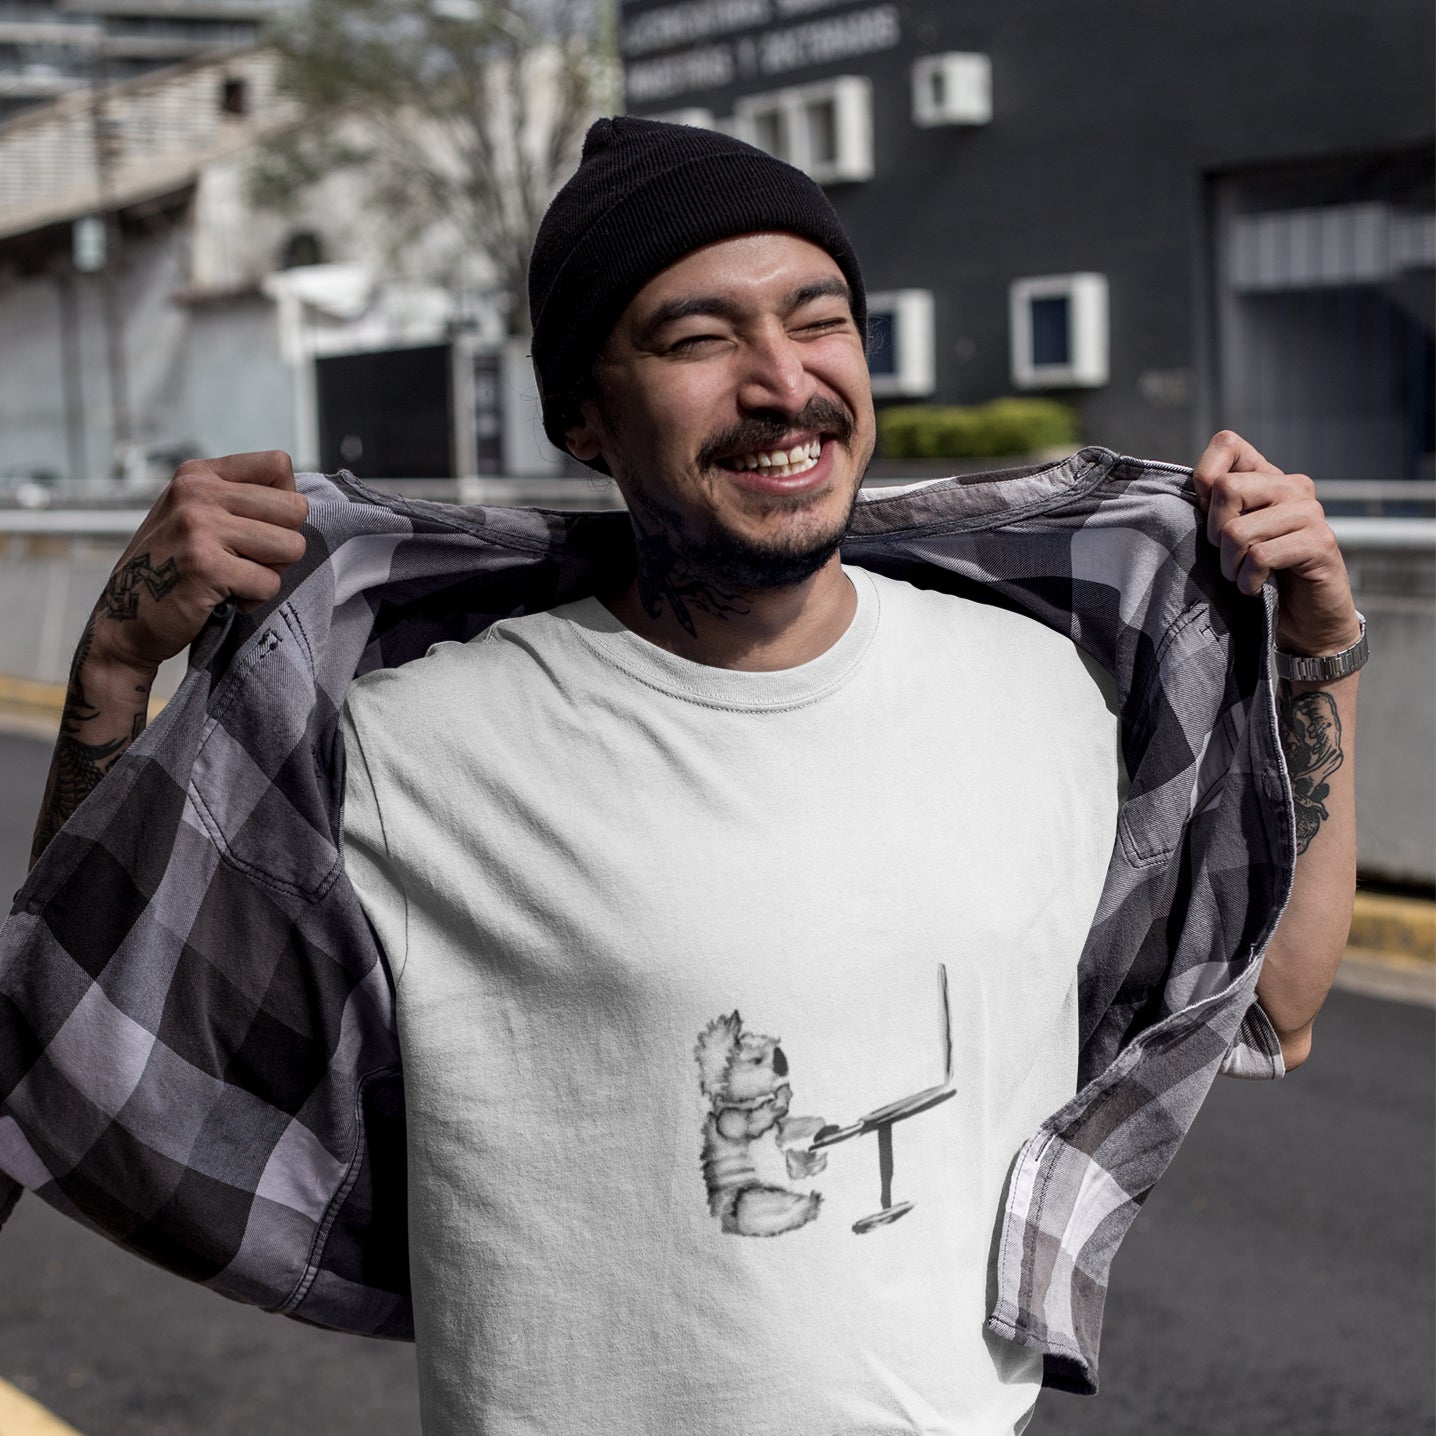 Koala Computer | 100% Organic Cotton T Shirt worn by a man on the street